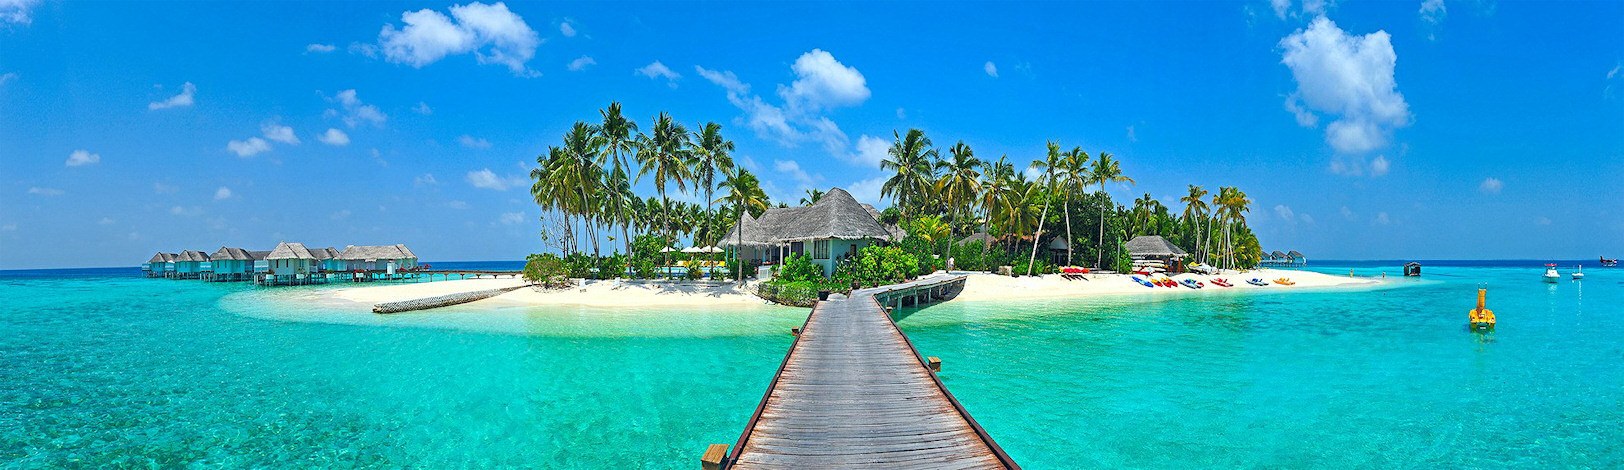 Maldív-szigetek panoráma